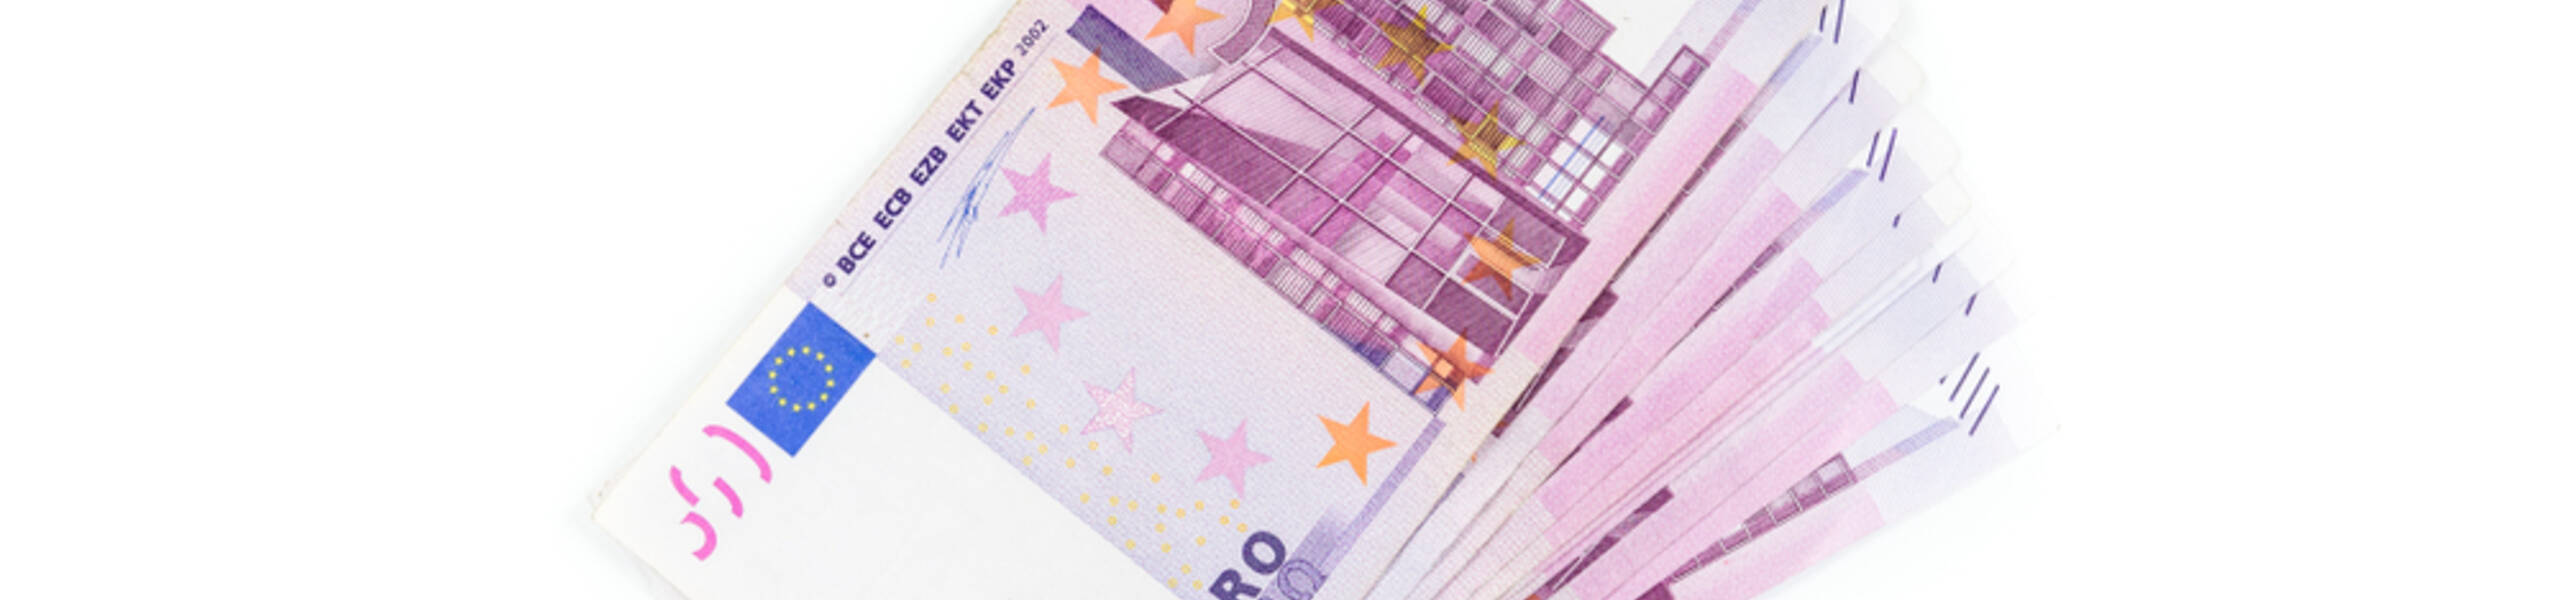 تحليل زوج اليورو دولار ليوم 28-5-2020